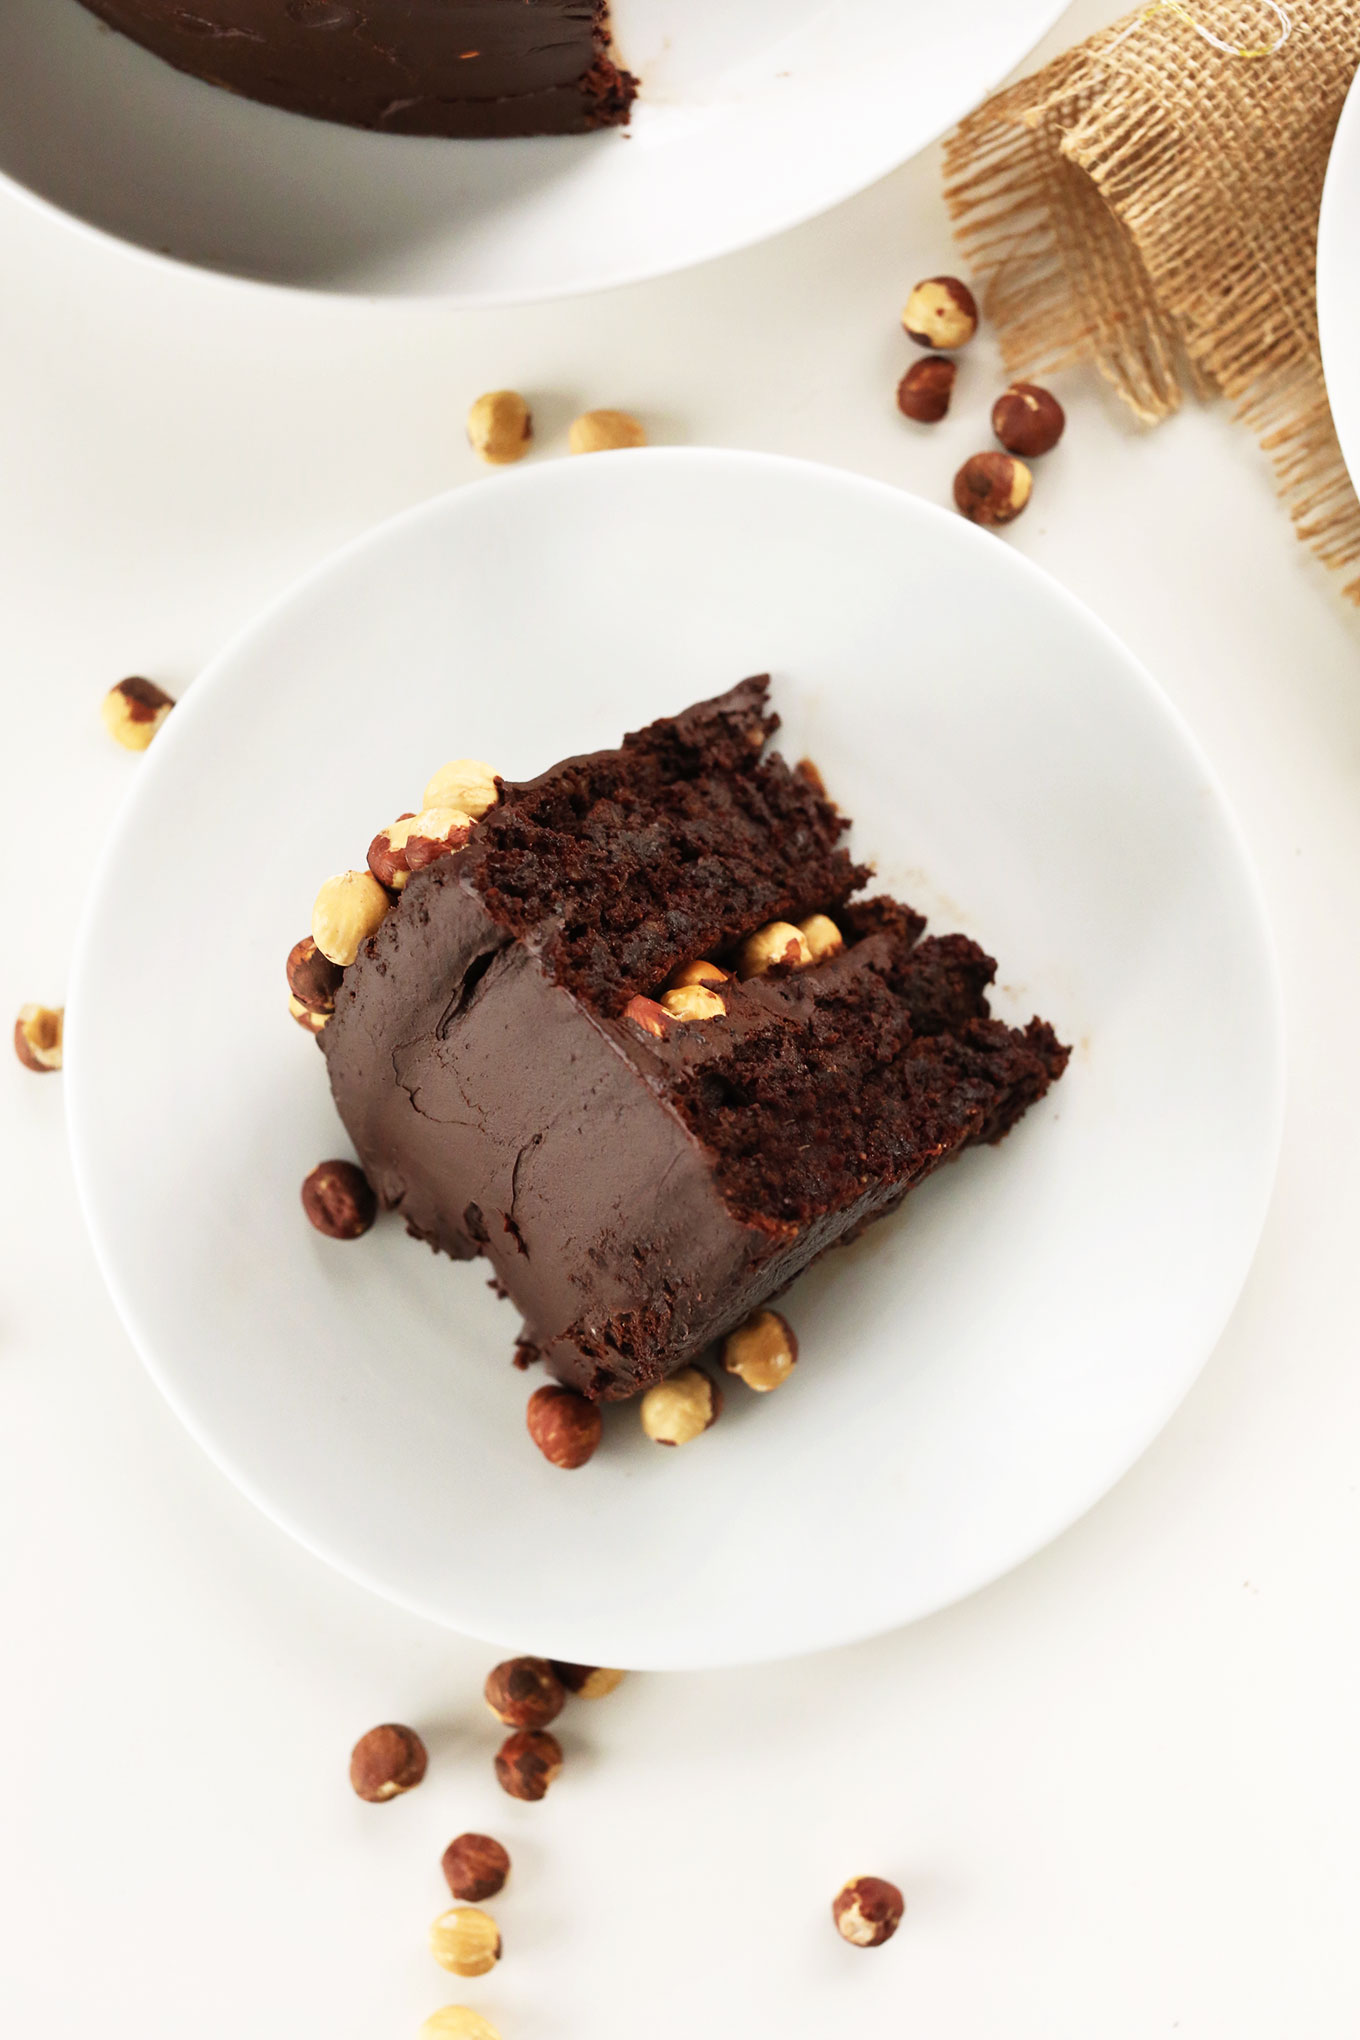 Plate of our super rich gluten-free vegan Chocolate Hazelnut Cake